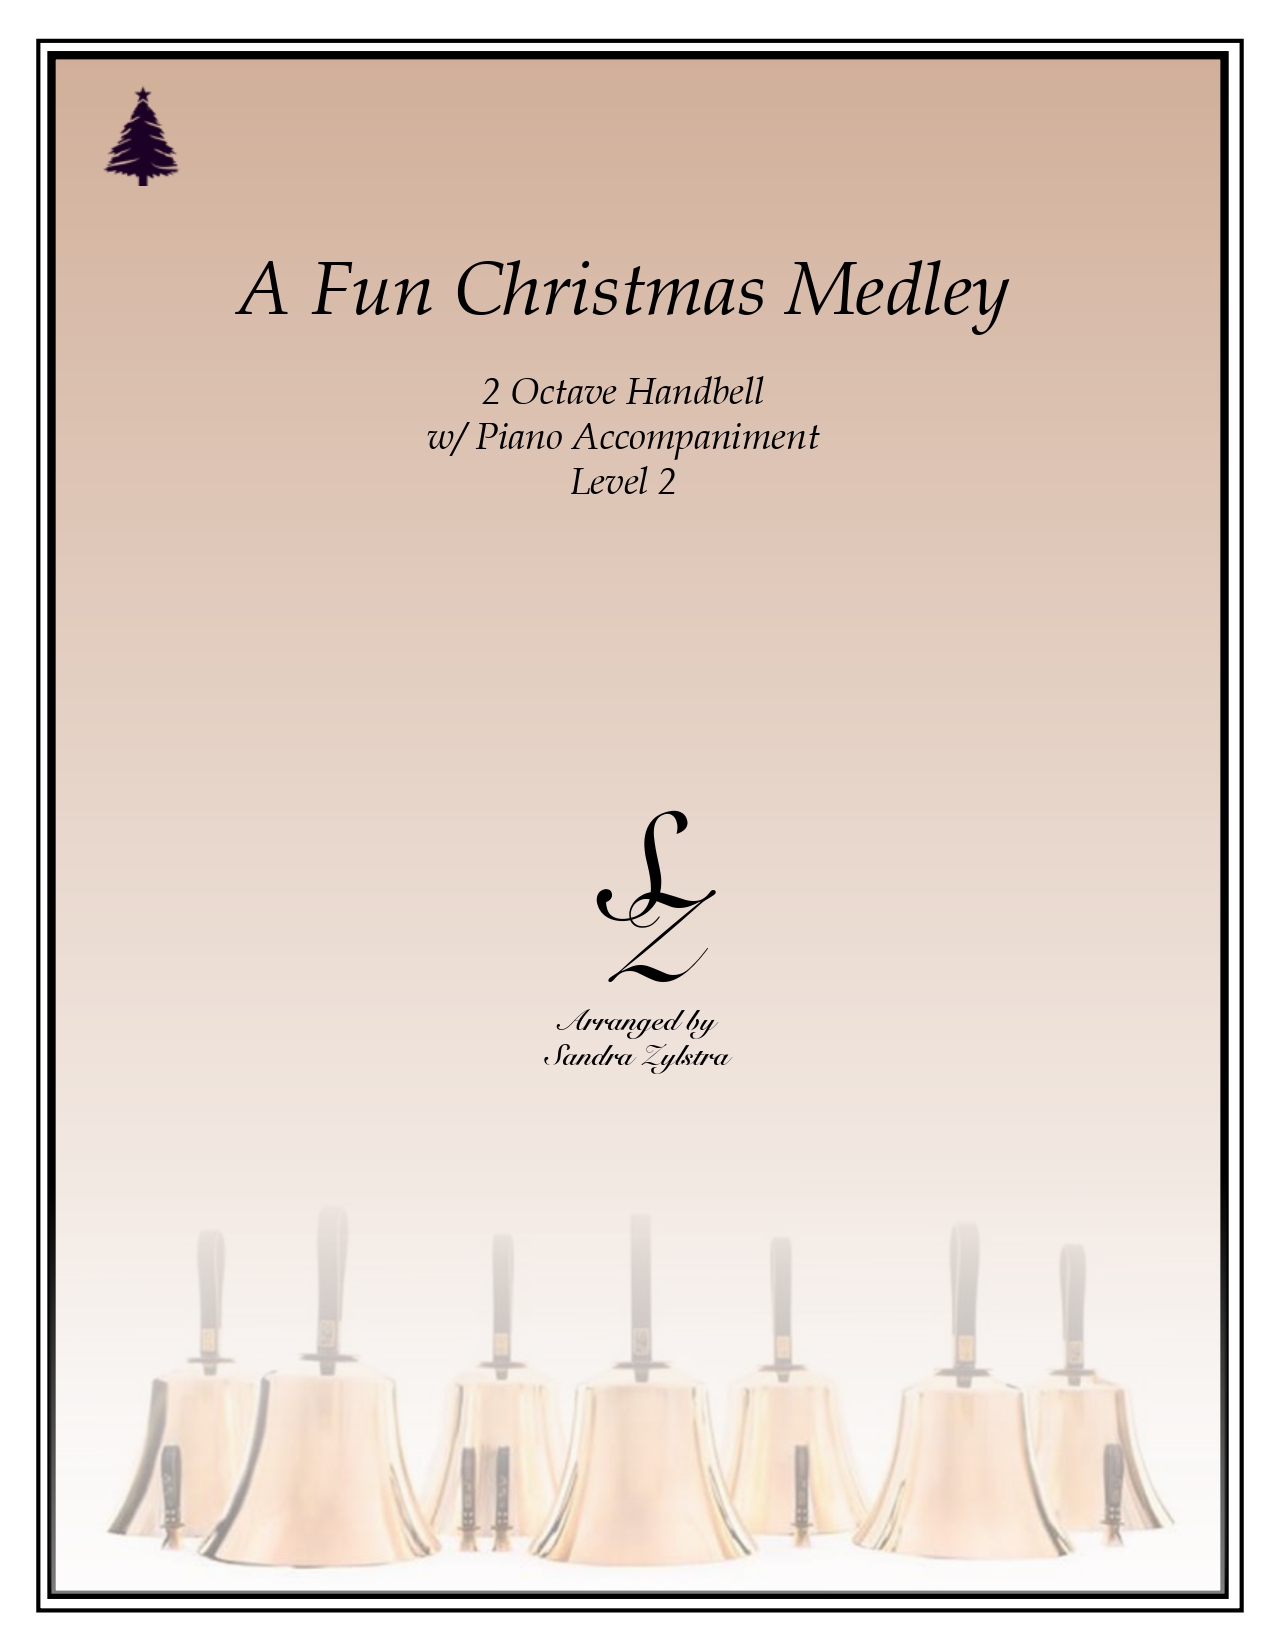 A Fun Christmas Medley 2 octave handbells piano part cover page 00011